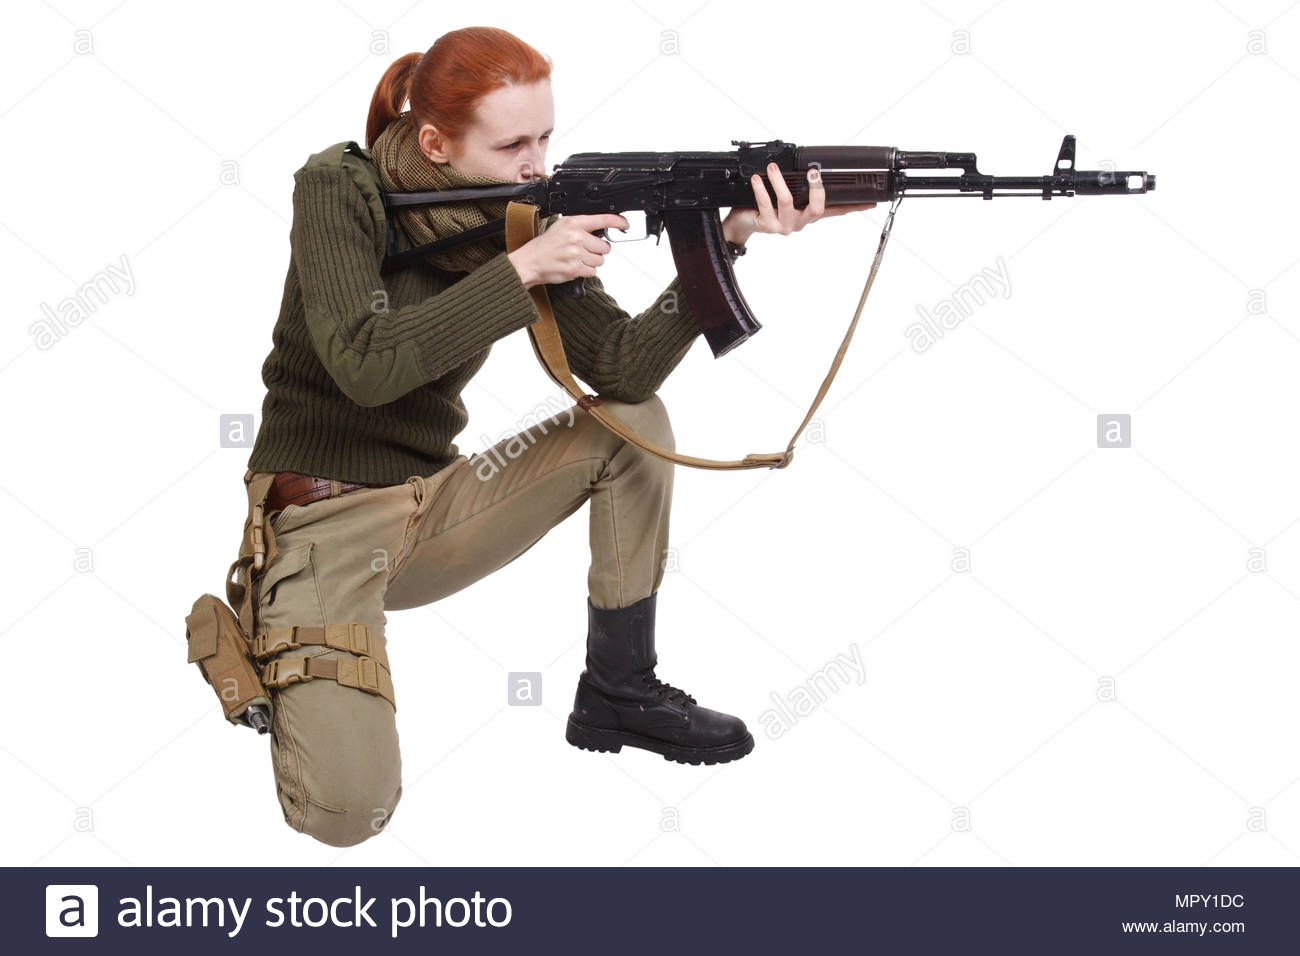 girl mercenary with ak 47 rifle with kalashnikov rifle isolated on